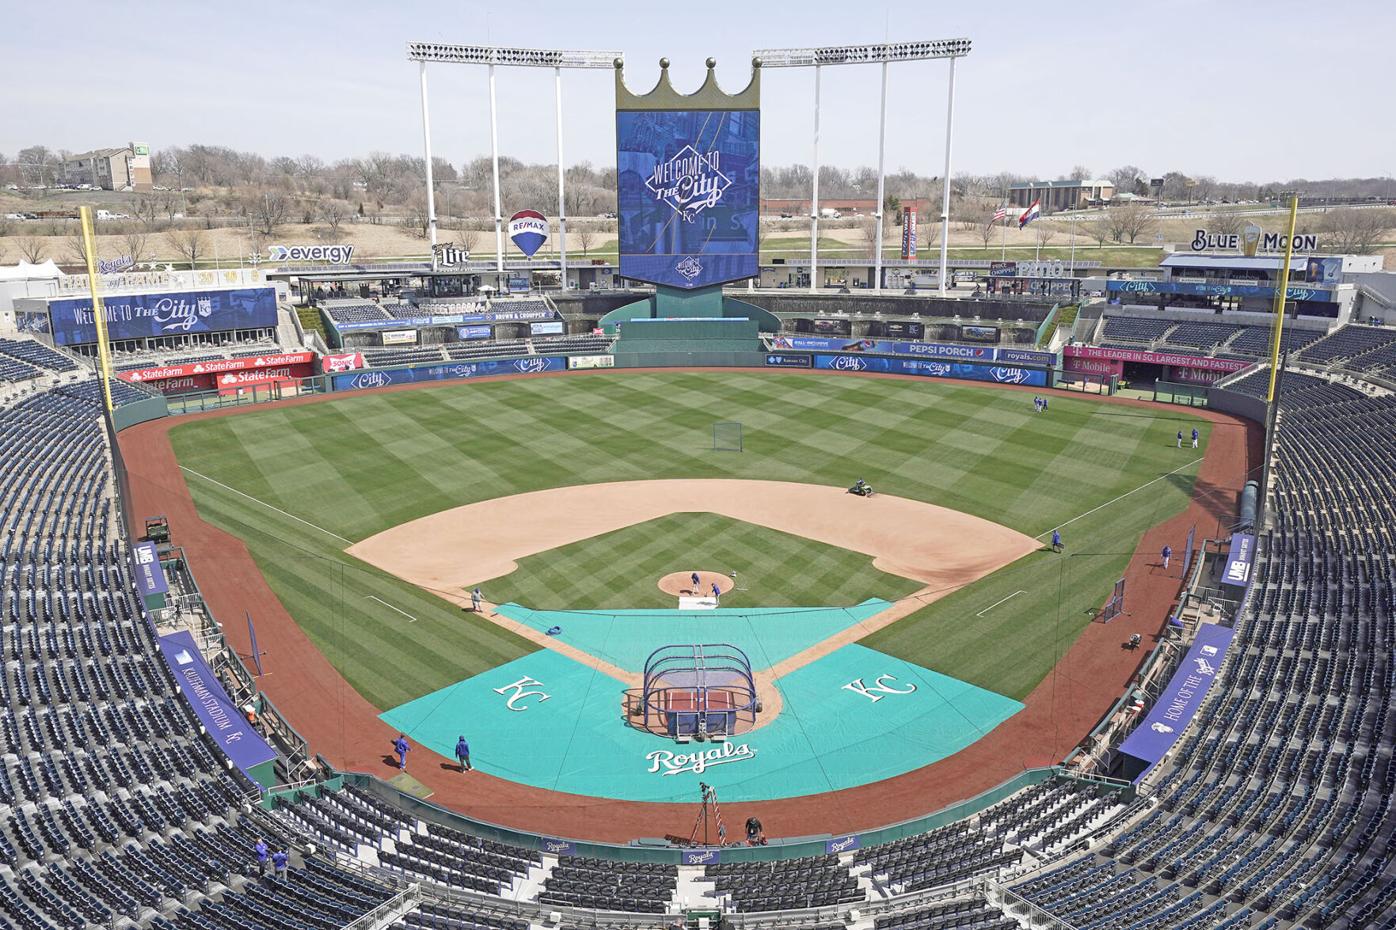 VIDEO: Royals renderings of possible downtown stadium